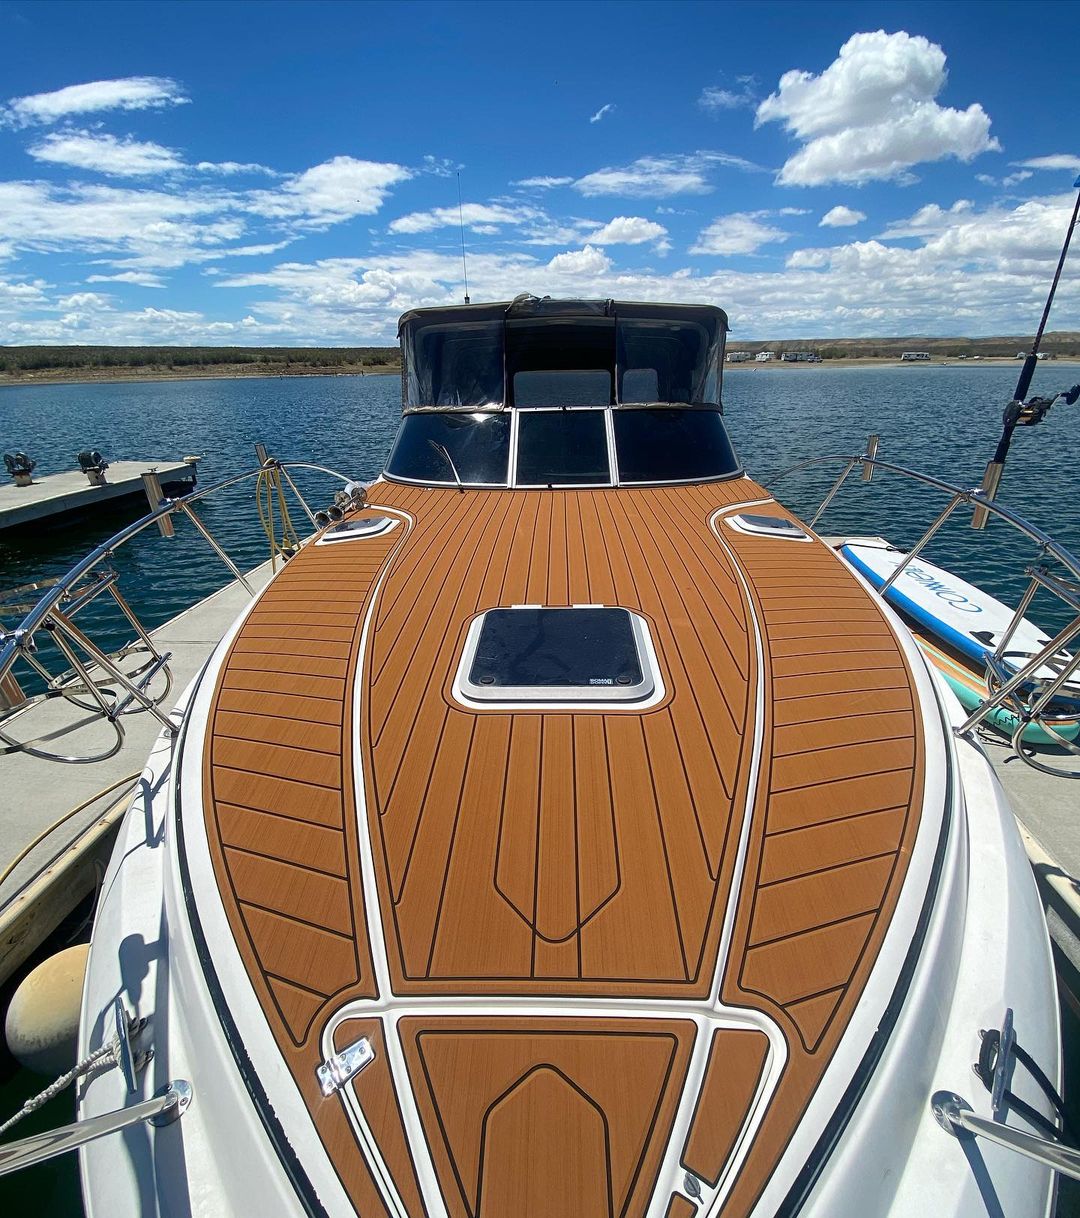 gatorstep boat flooring decking yacht teak brown tan black